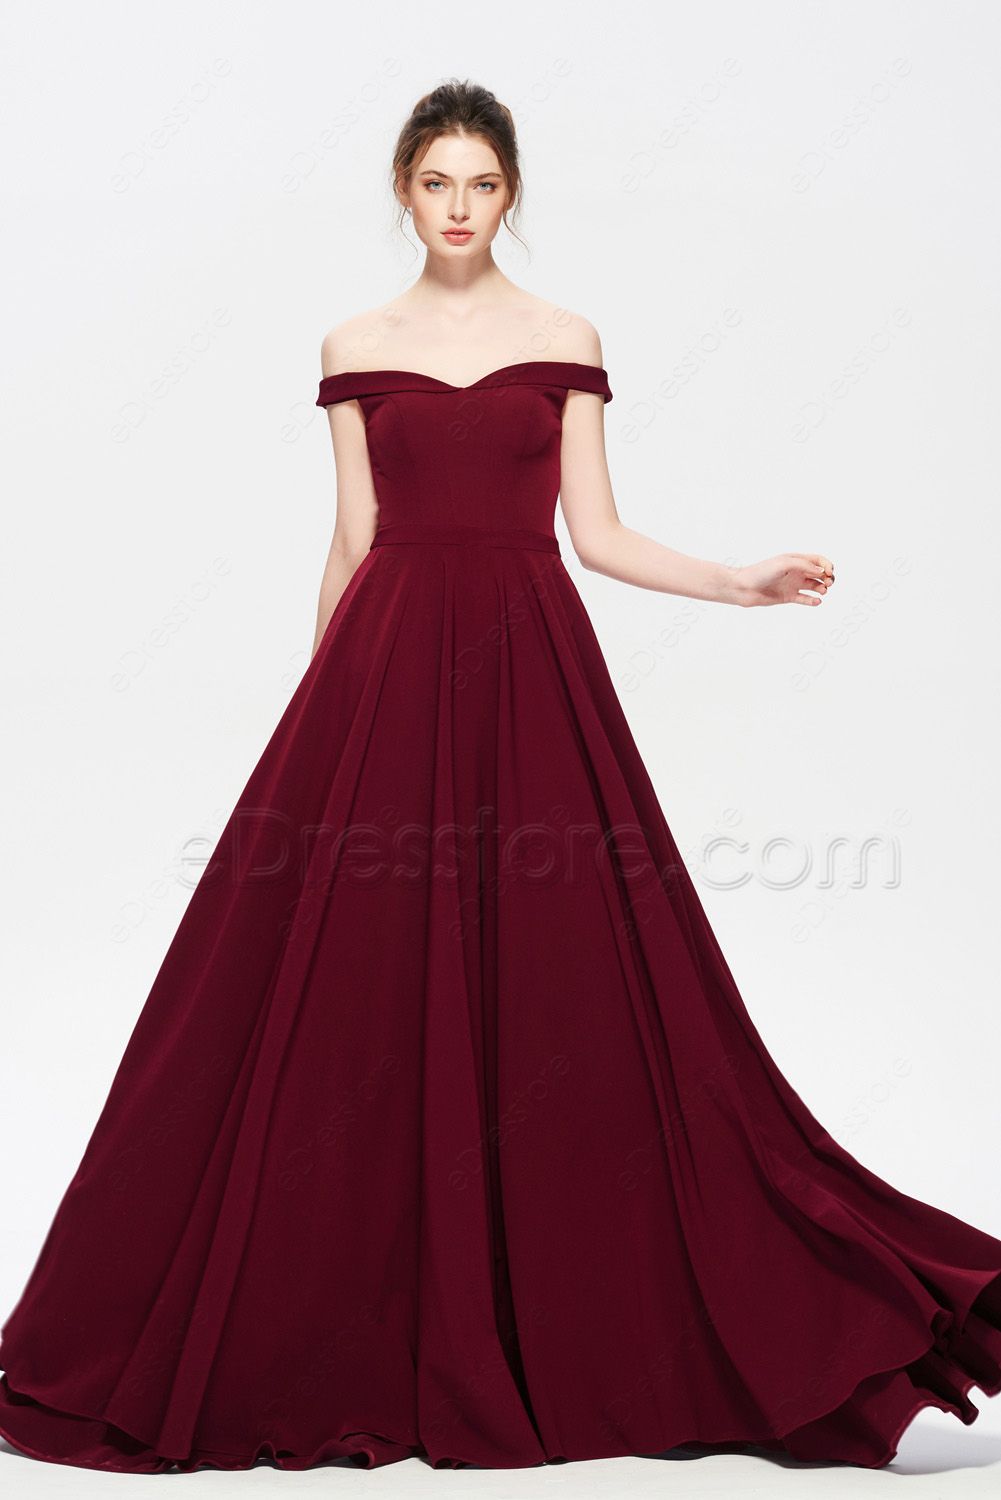 Burgundy Prom Dresses Long Off the Shoulder | eDresstore